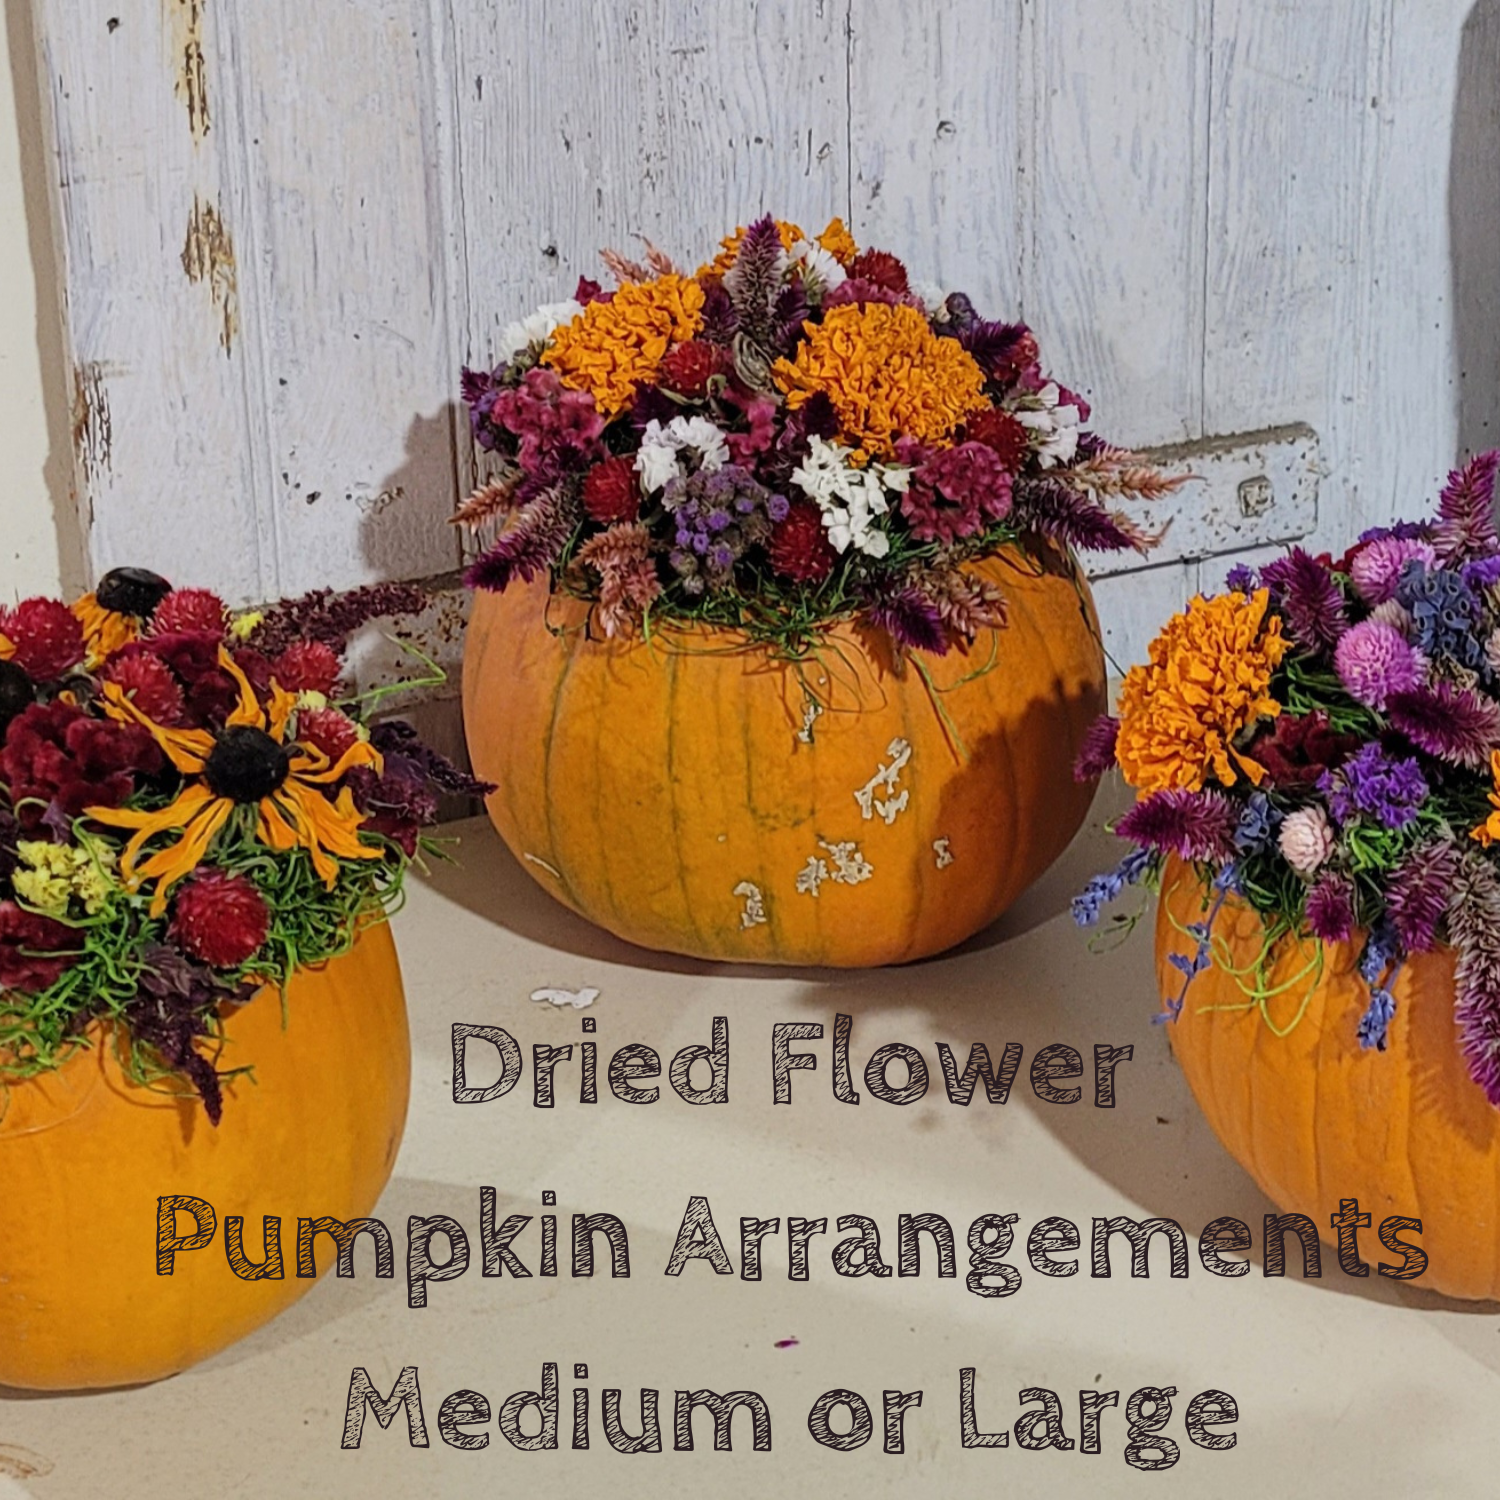 Previous Happening: NEW!! Gorgeous Dried Flowers Pumpkin Arrangements + A NEW Breakfast Roll